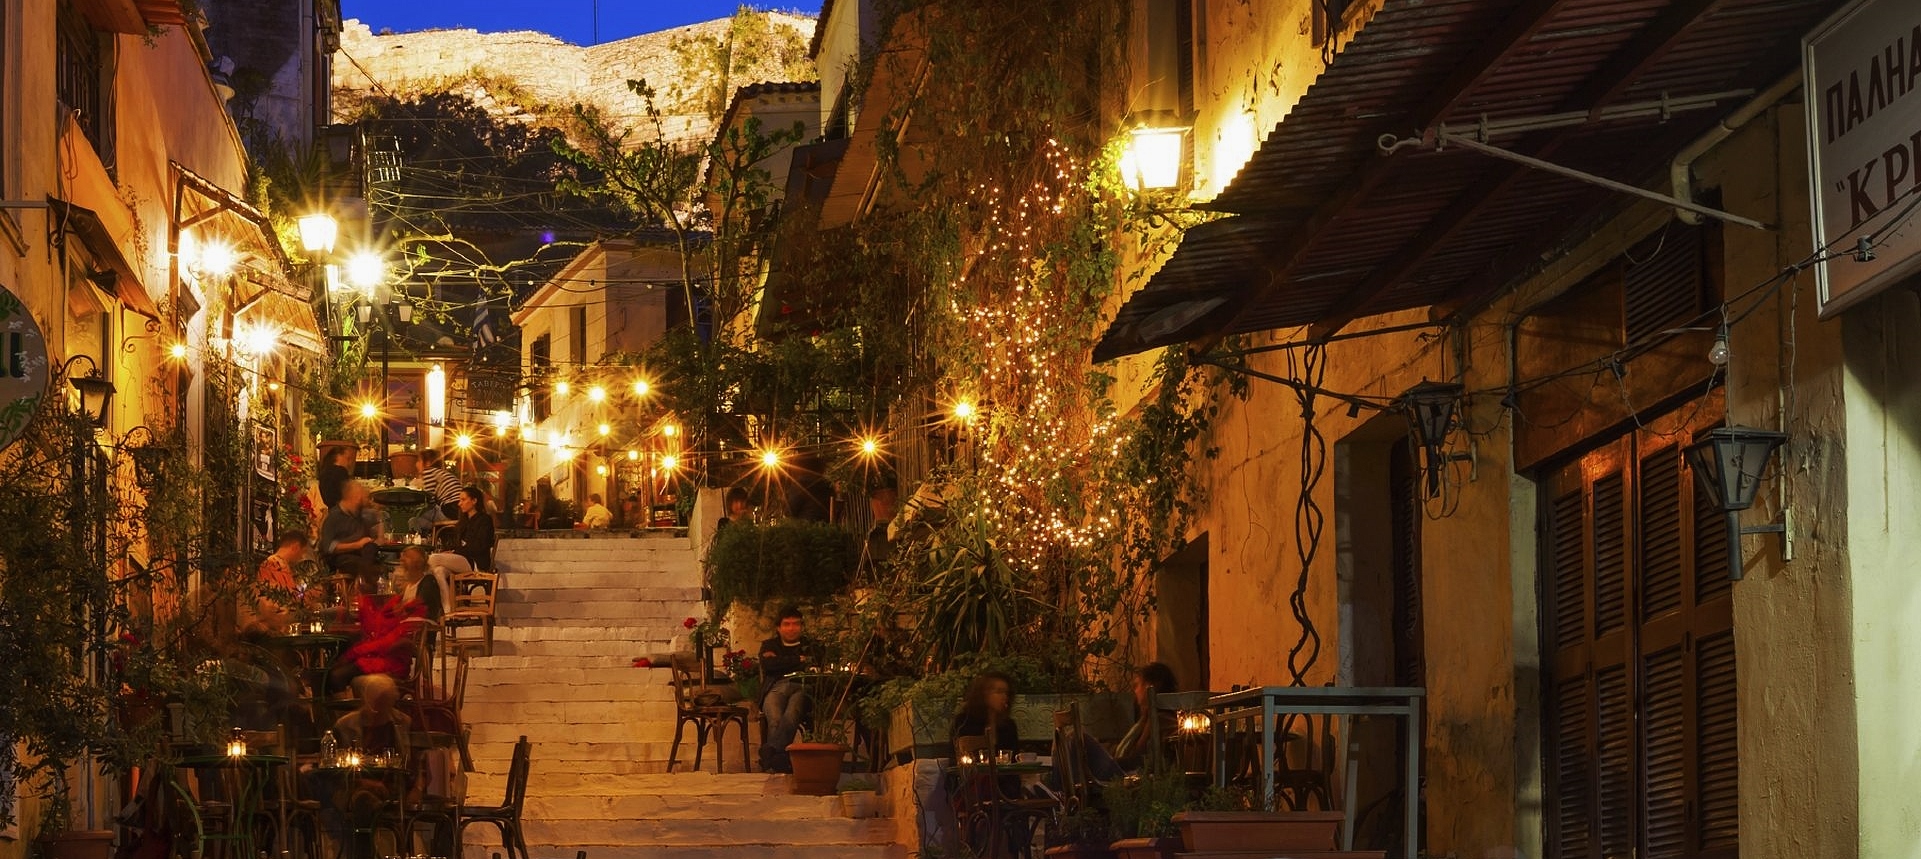 Overnachting in Athene - taverna in Plaka